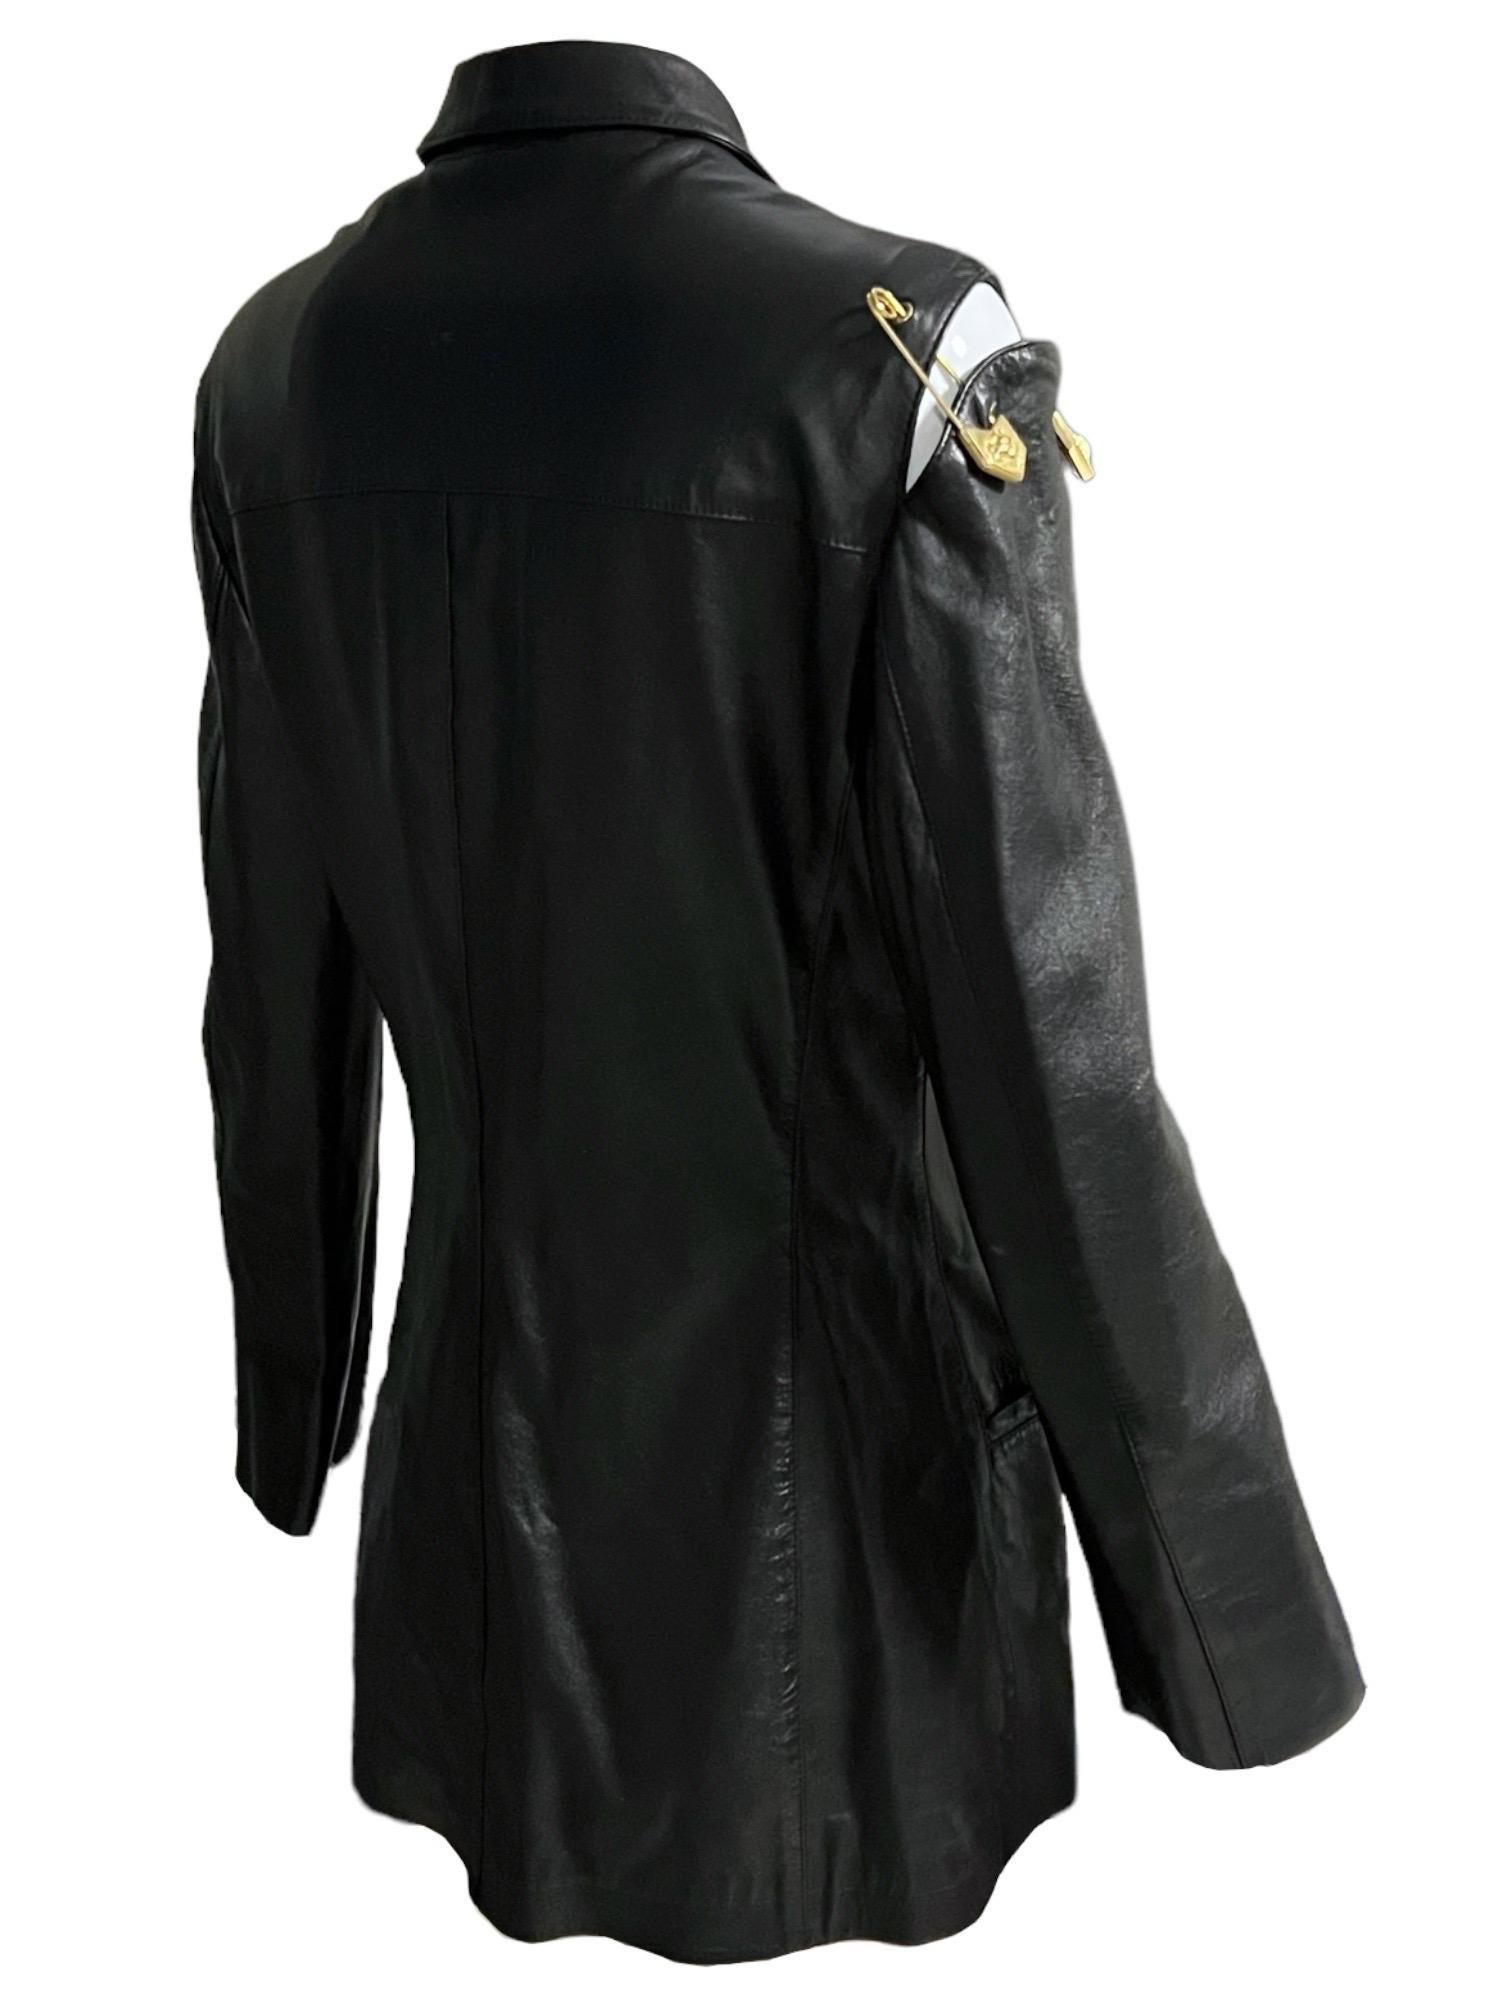 Gianni Versace Versus 90's Vintage Black Leather Safety Pin Jacket 2